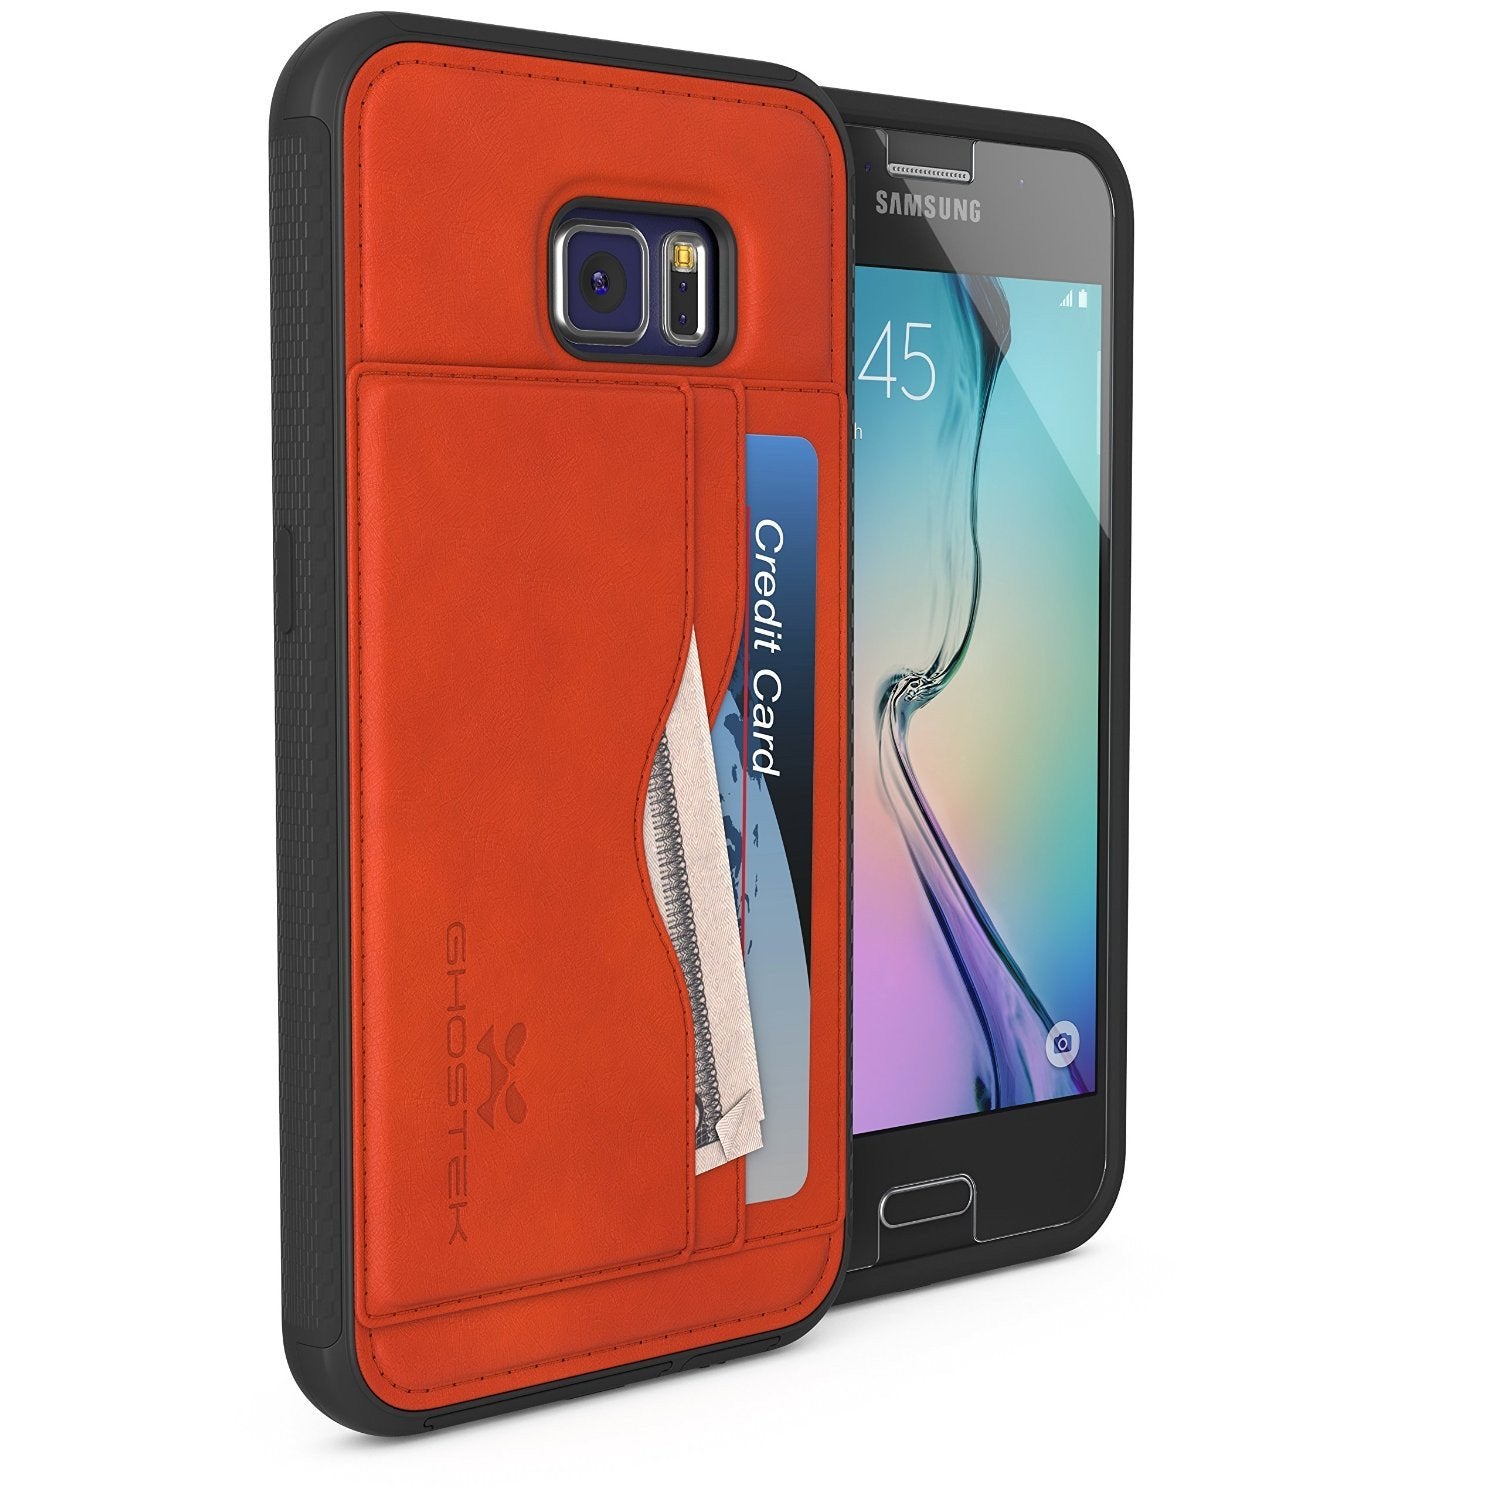 Galaxy S6 Wallet Case, Ghostek Stash Brown Wallet Case w/ Tempered Glass | Lifetime Warranty - PunkCase NZ